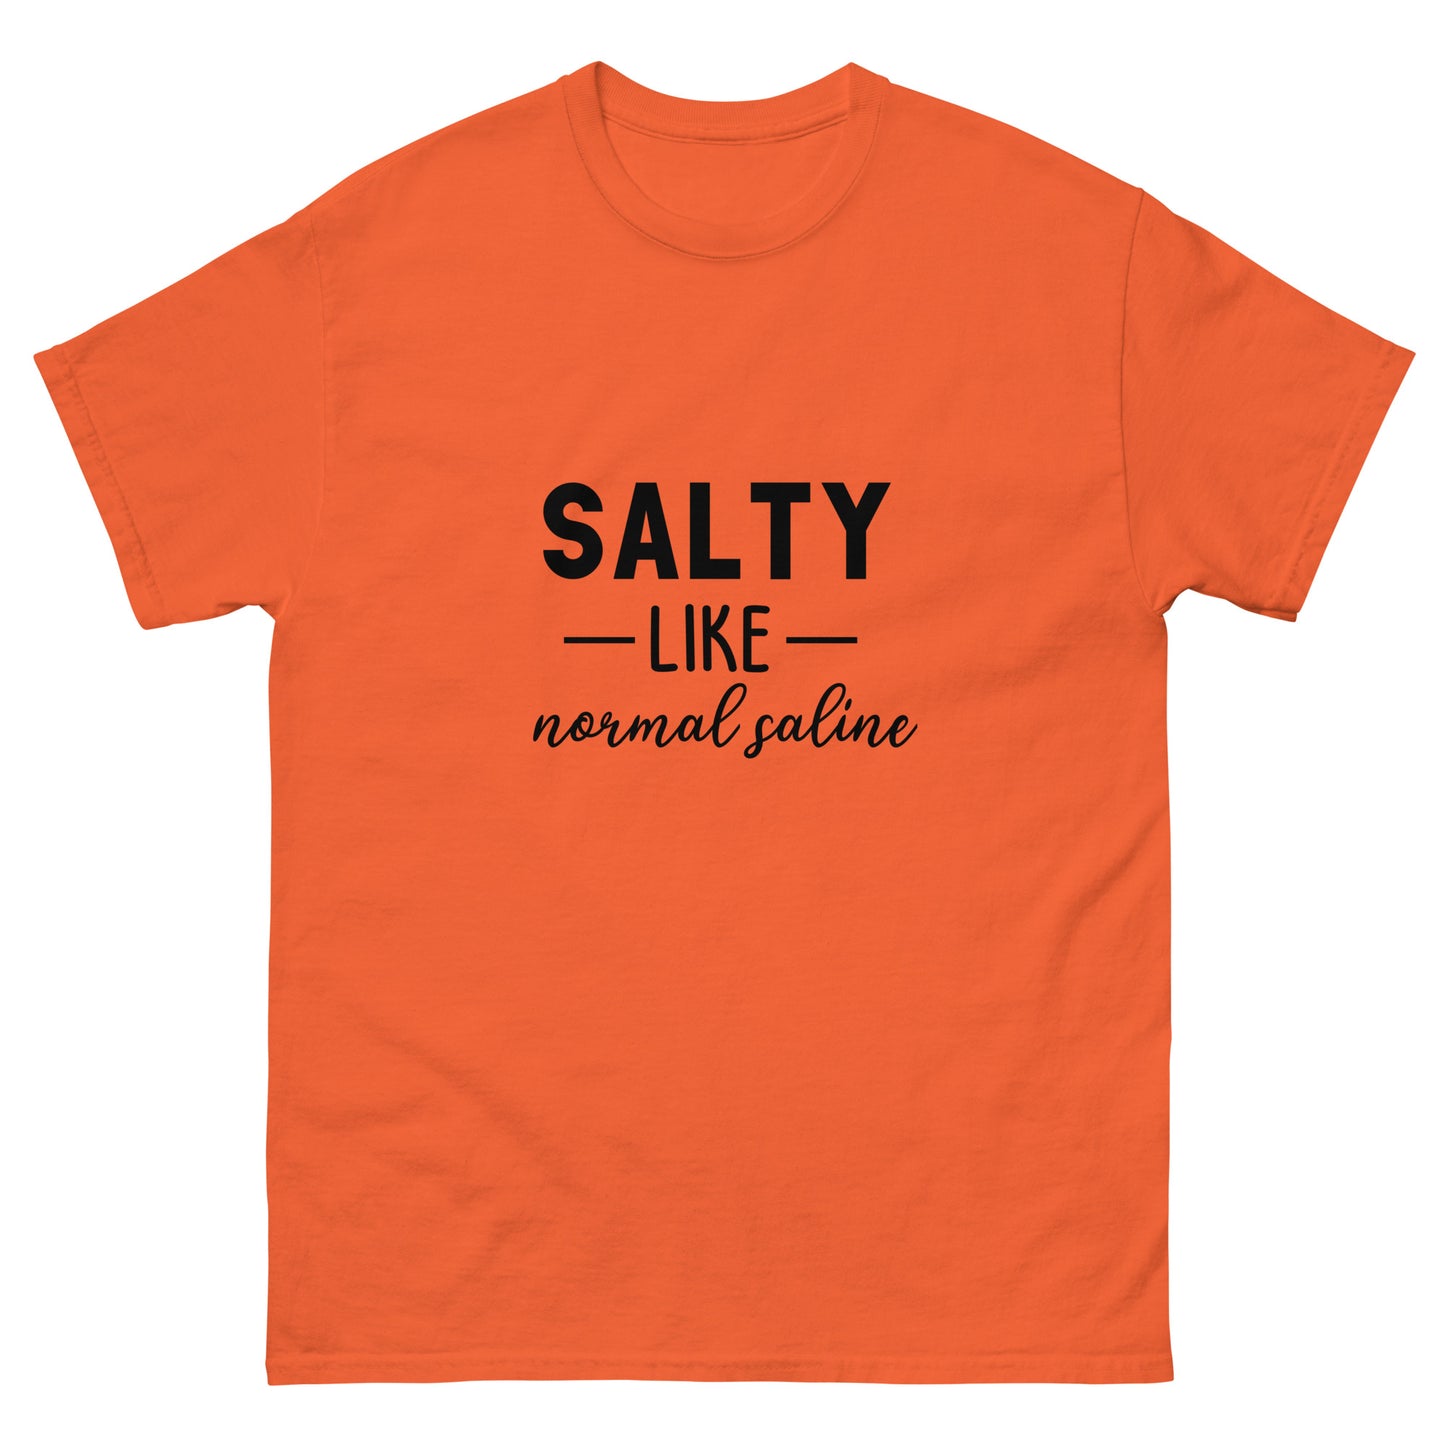 Salty like Saline classic tee